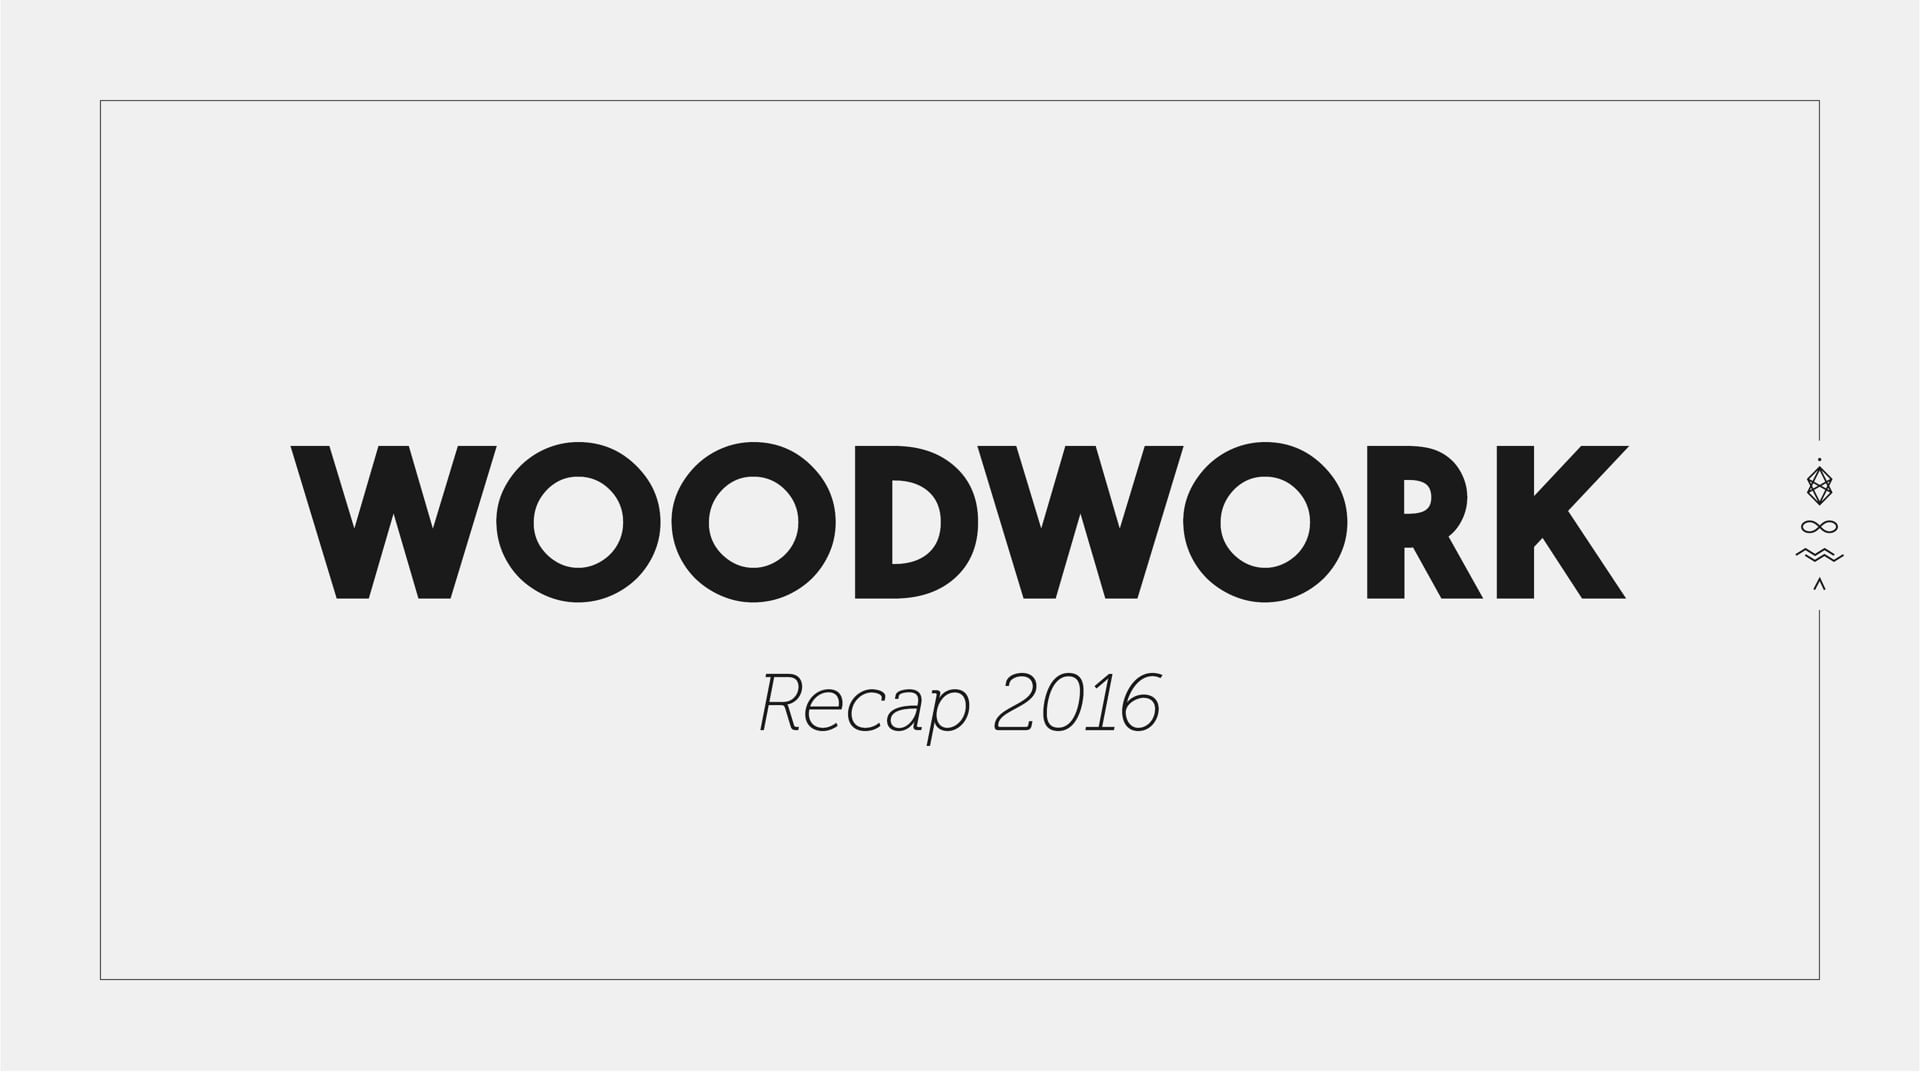 Woodwork Recap 2016